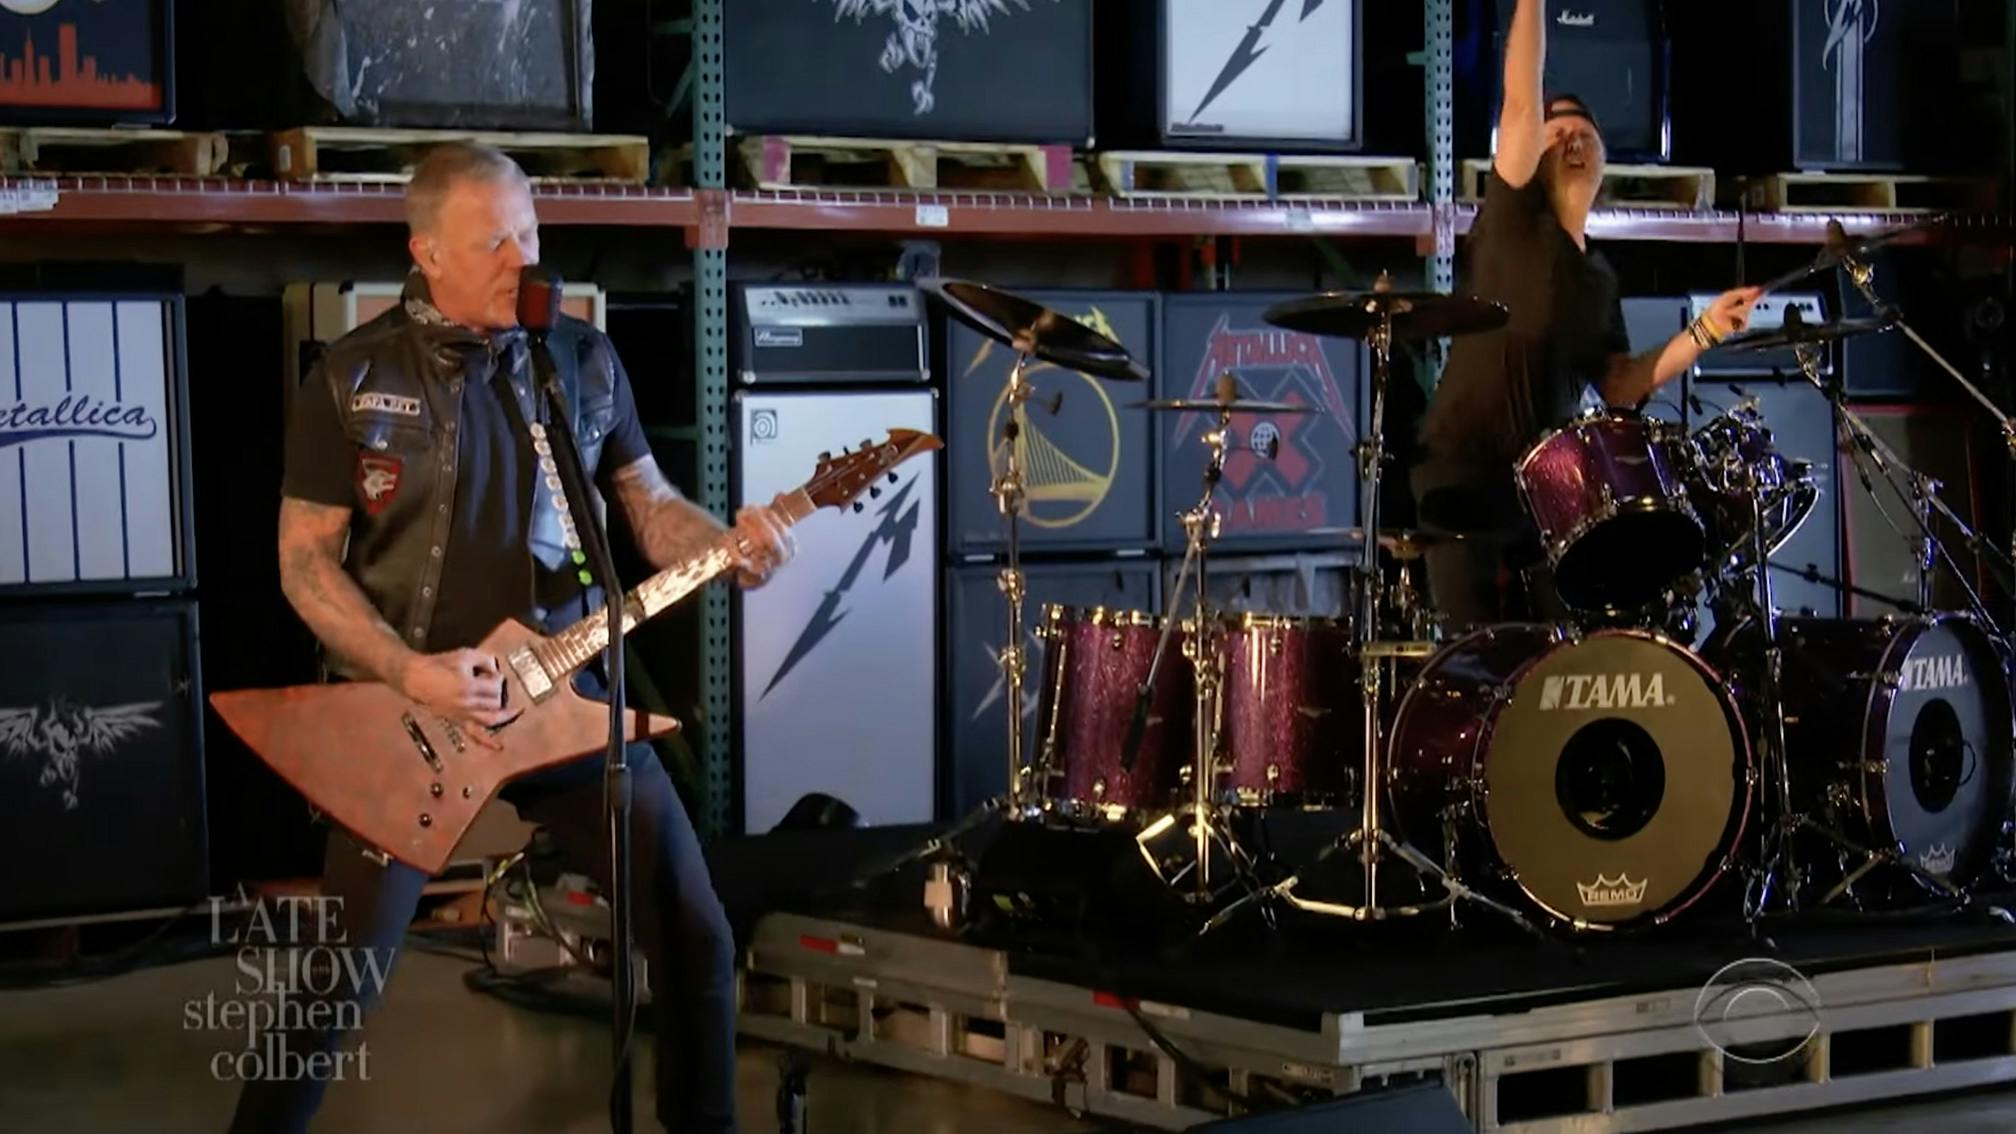 Watch Metallica tear through Enter Sandman on The Late Show with Stephen Colbert